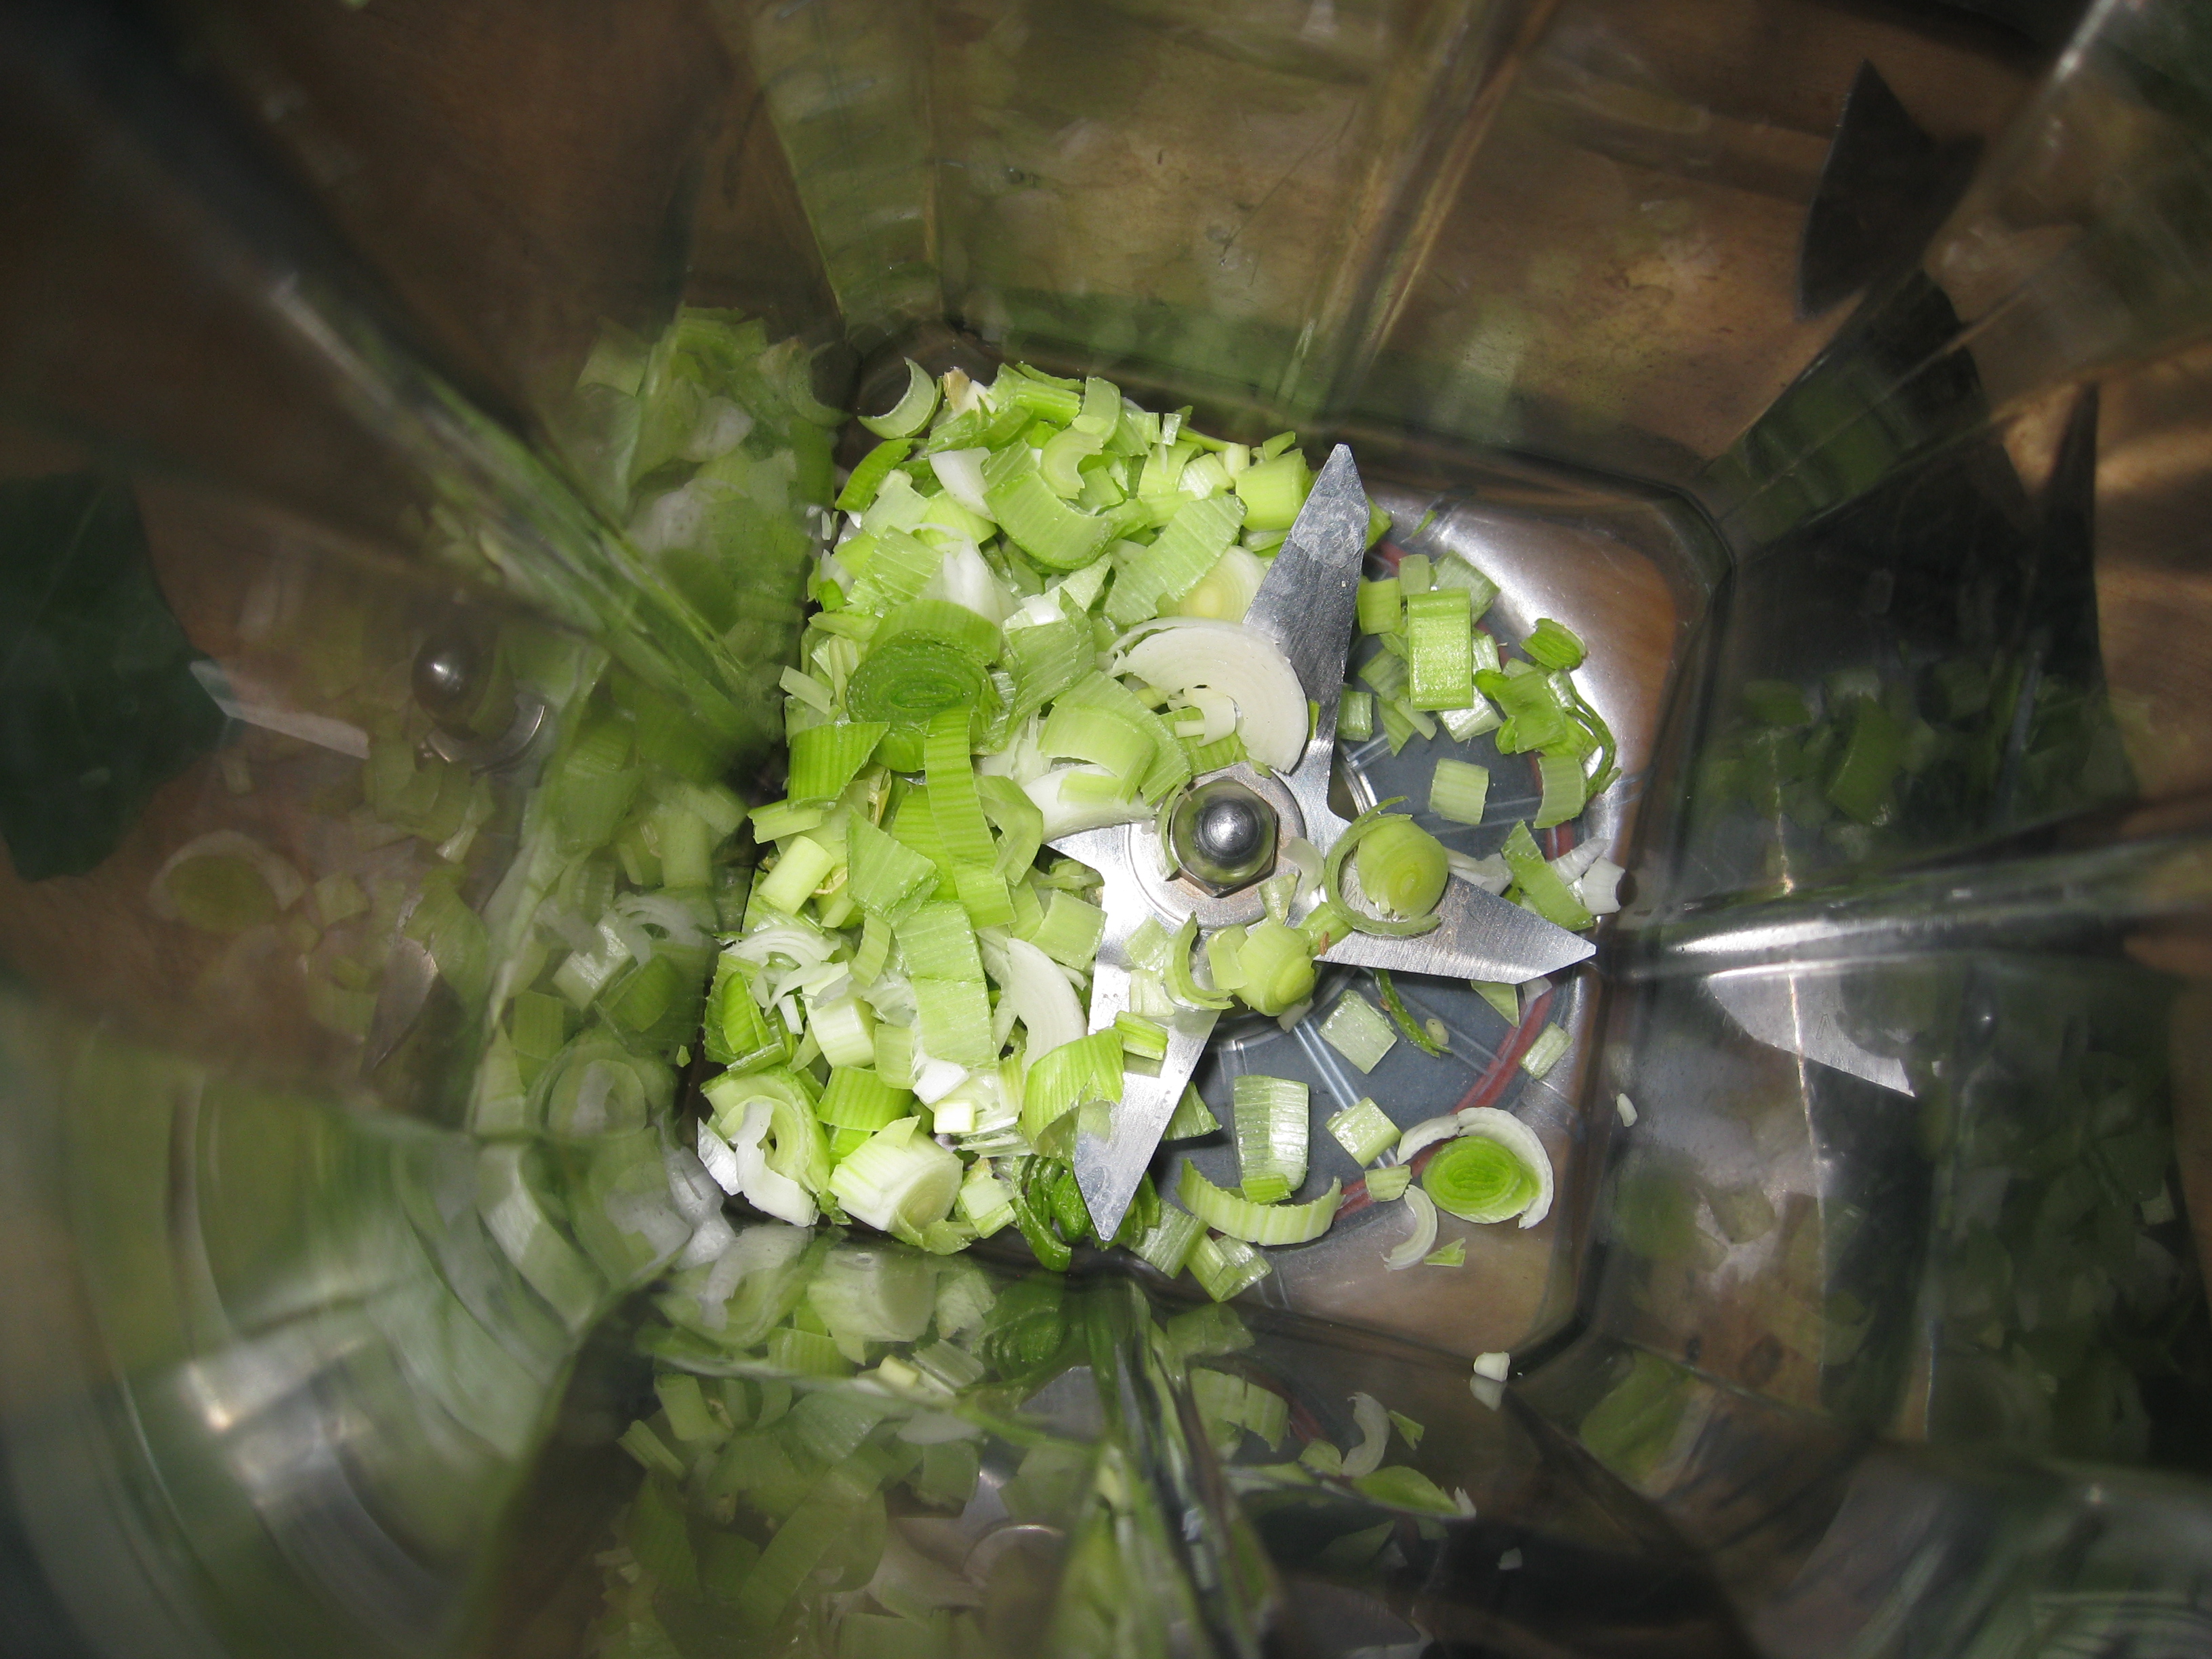 Green garlic in a blender